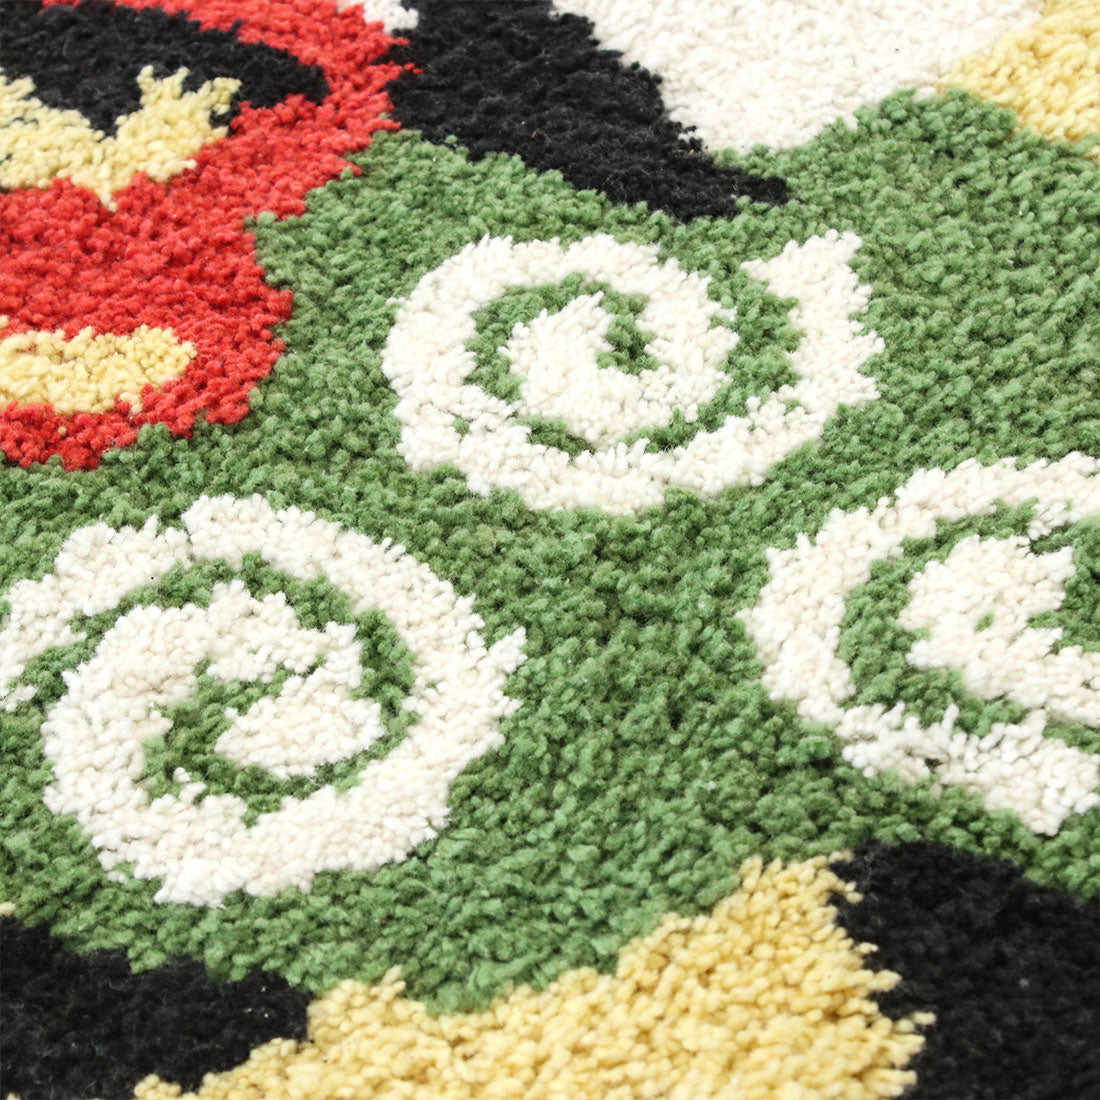 和風吉祥地毯│Japanese-Style Auspicious Carpet